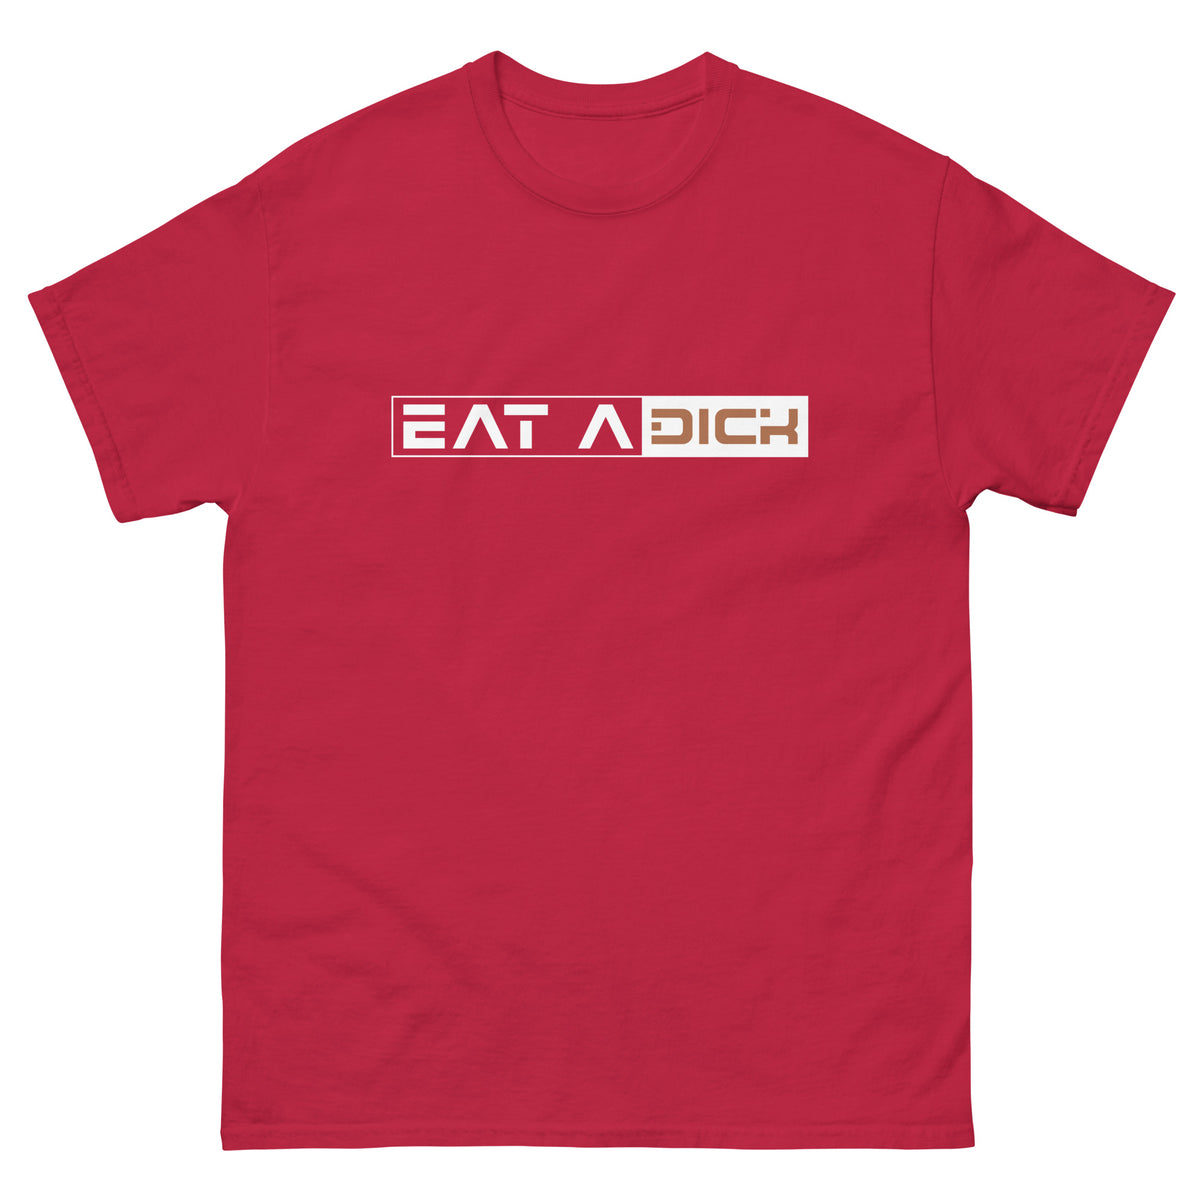 Eat a Dick T-Shirt